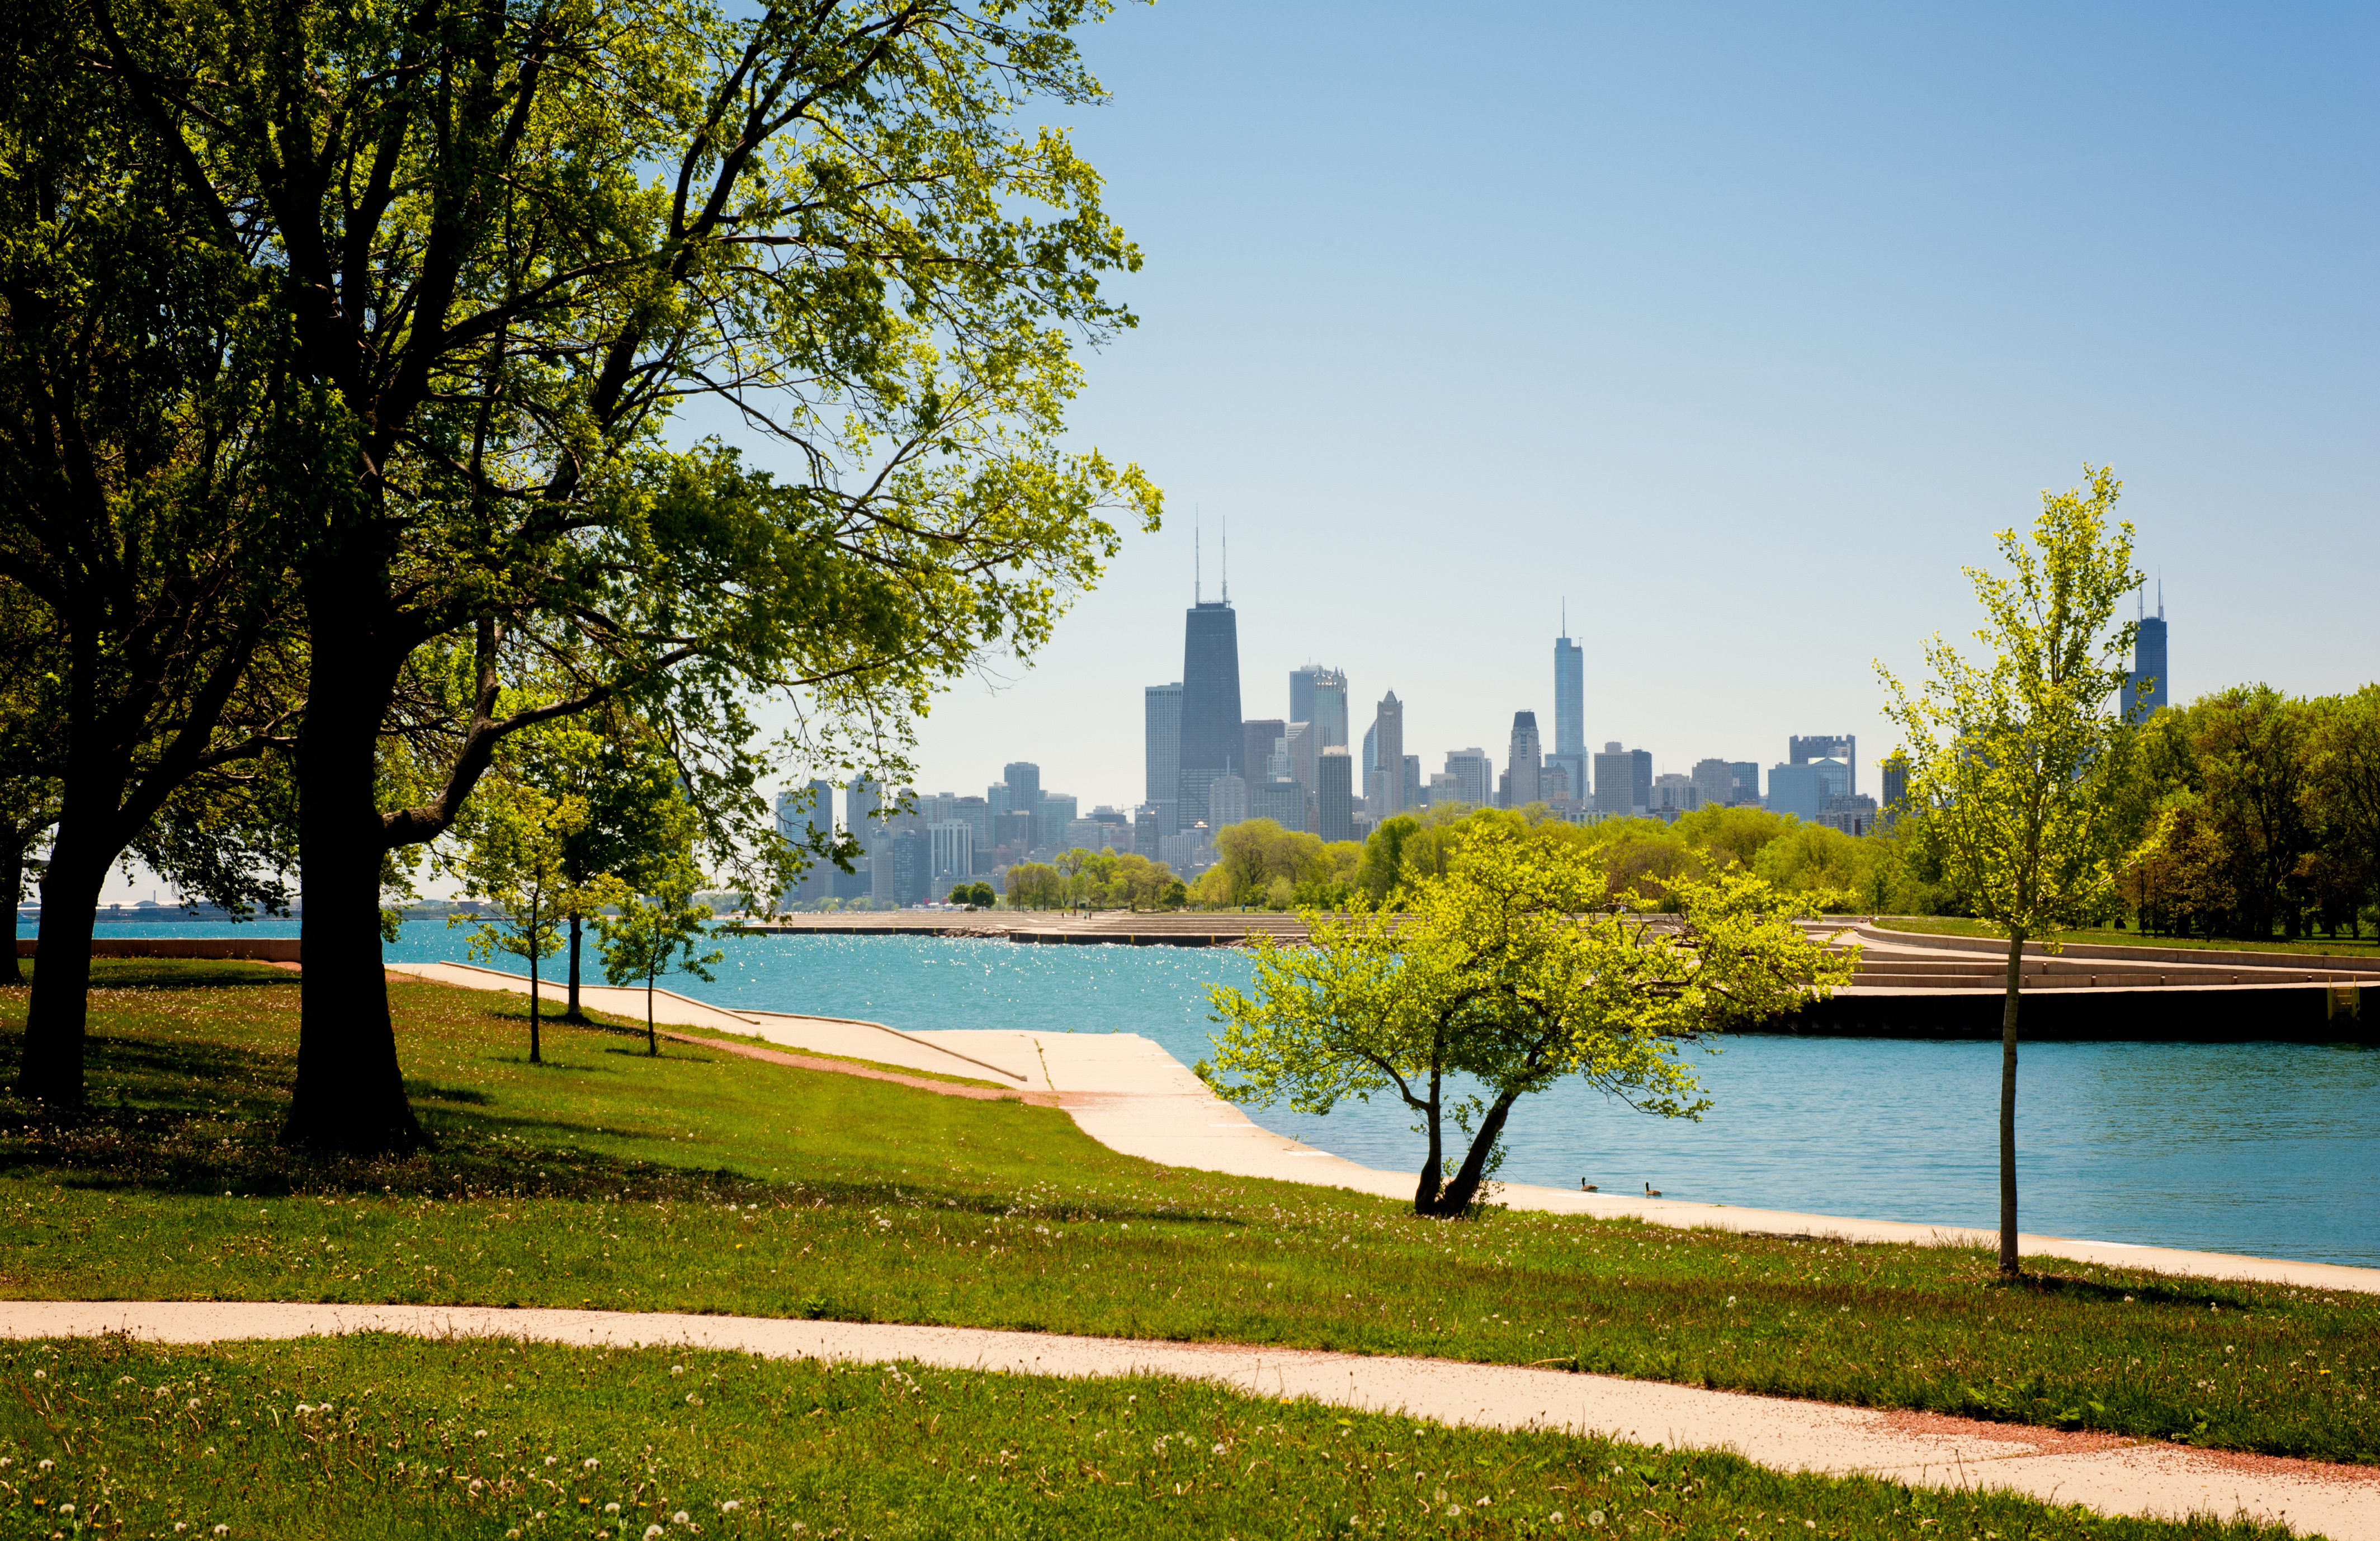 Картинки природы города. Ок-парк (Иллинойс). Чикаго (Иллинойс) парки. Чикаго Иллинойс озеро Мичиган. Город ок парк Иллинойс.